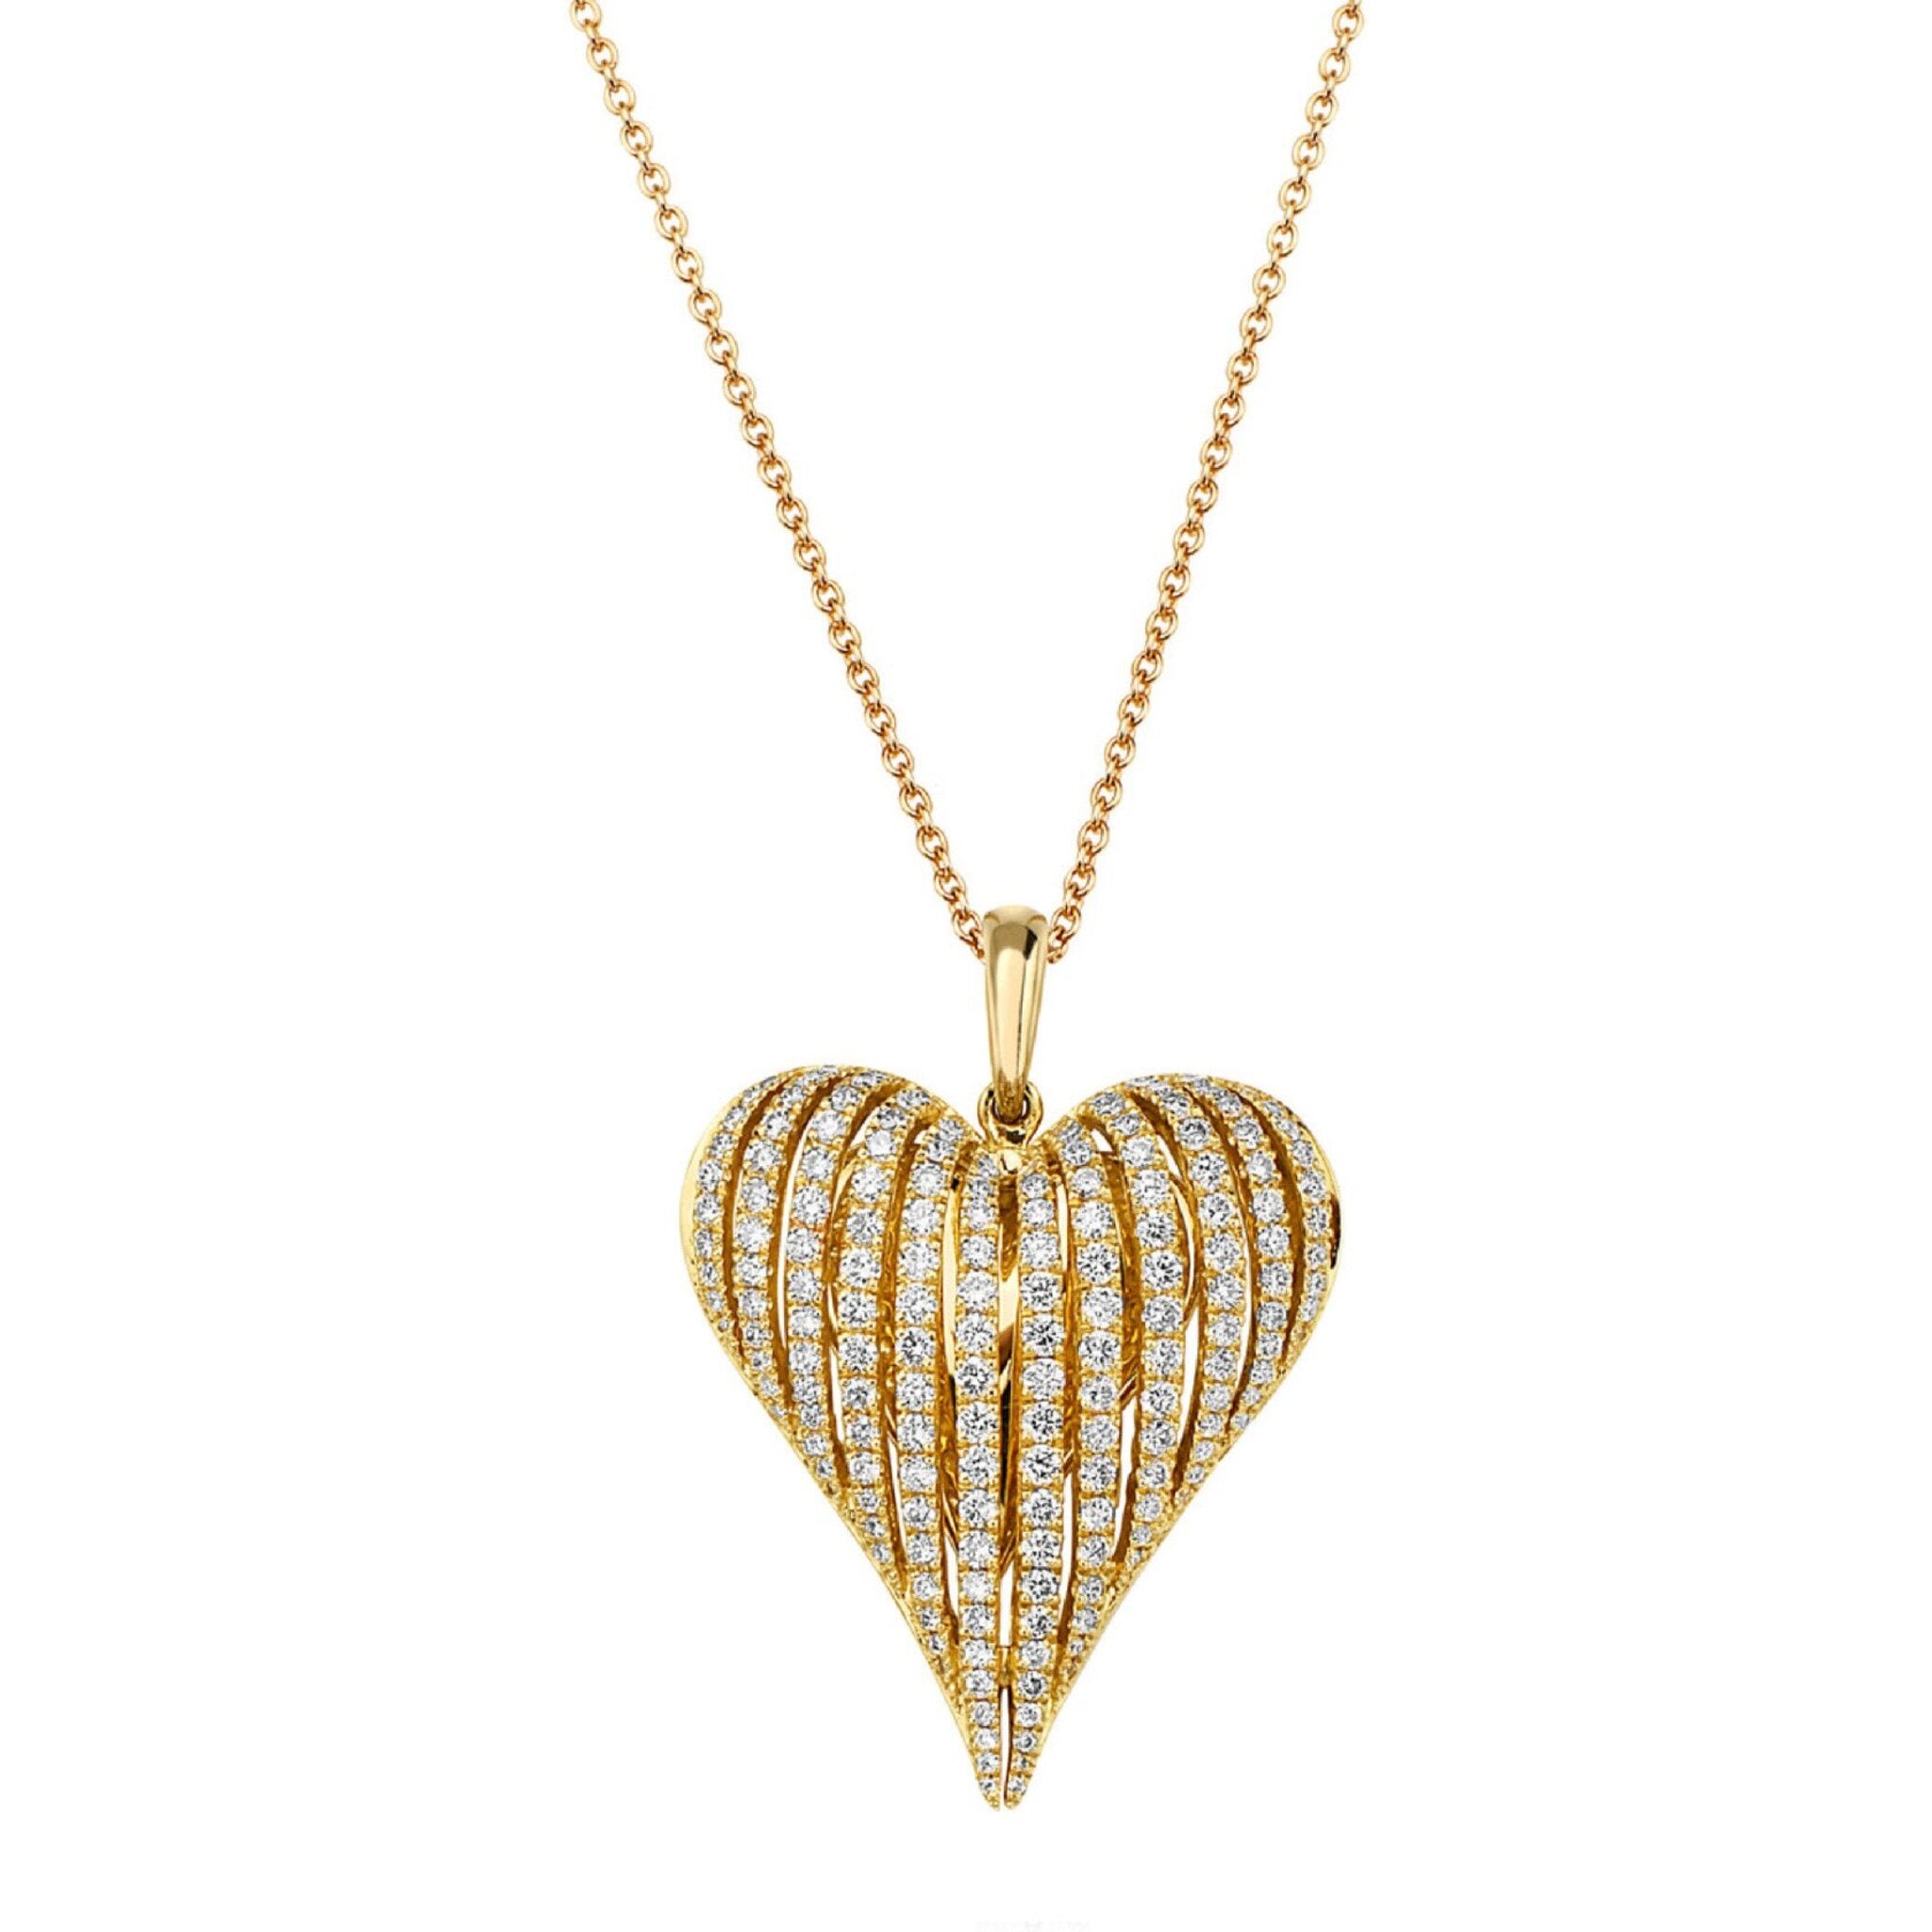 Charles Krypell - Angel Heart Large Diamond Pendant - Yellow Gold and Diamond